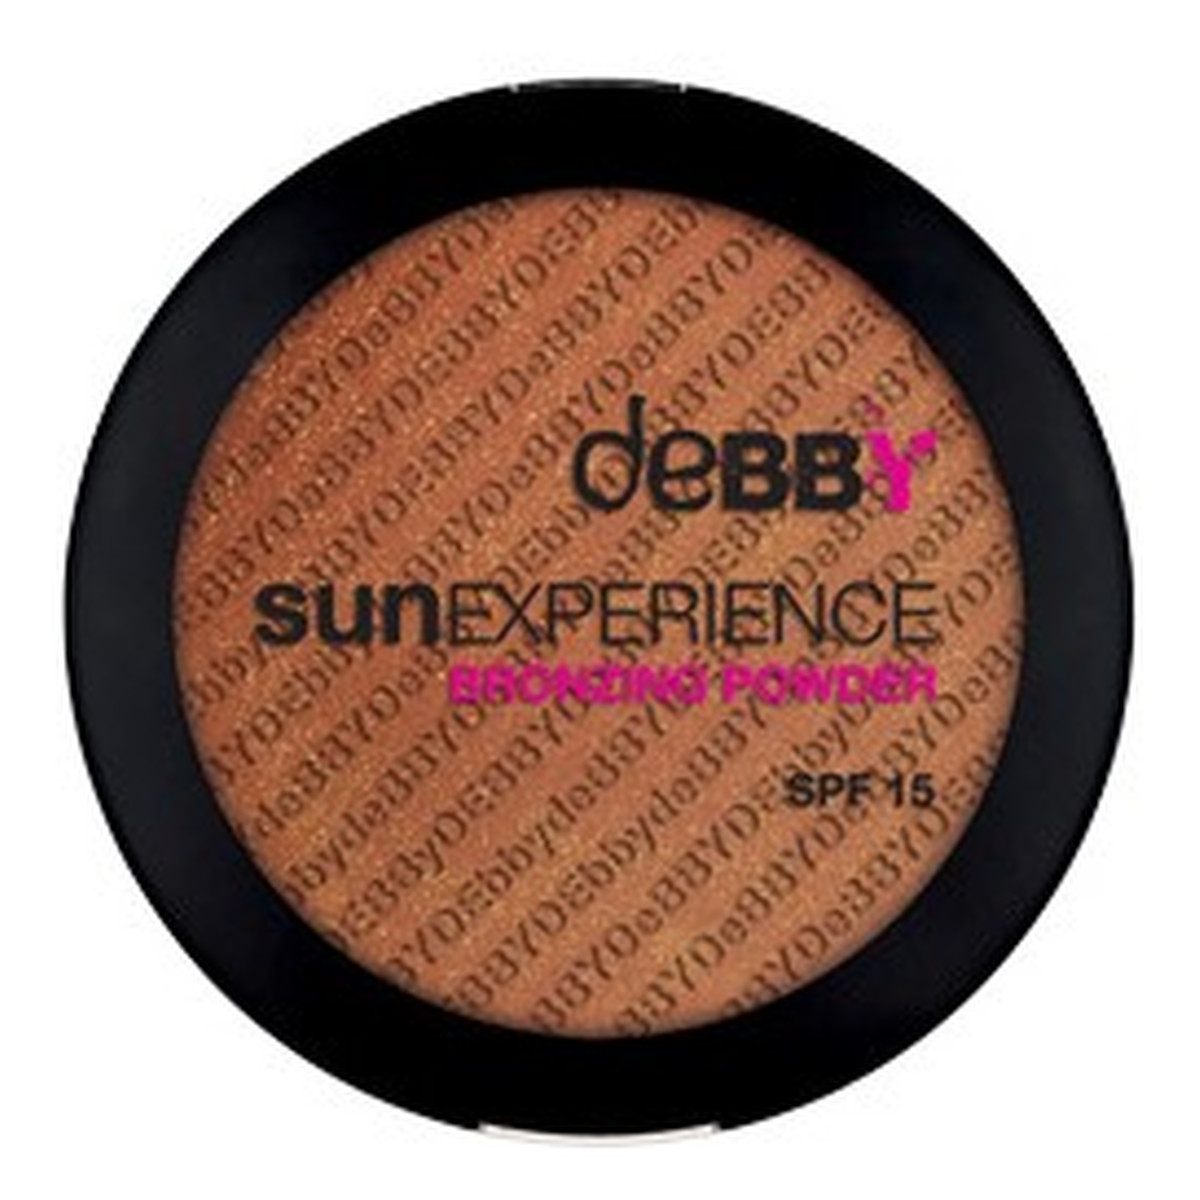 Debby Sun Experience Bronzing Powder Shimmer Puder brązujący SPF15 10g